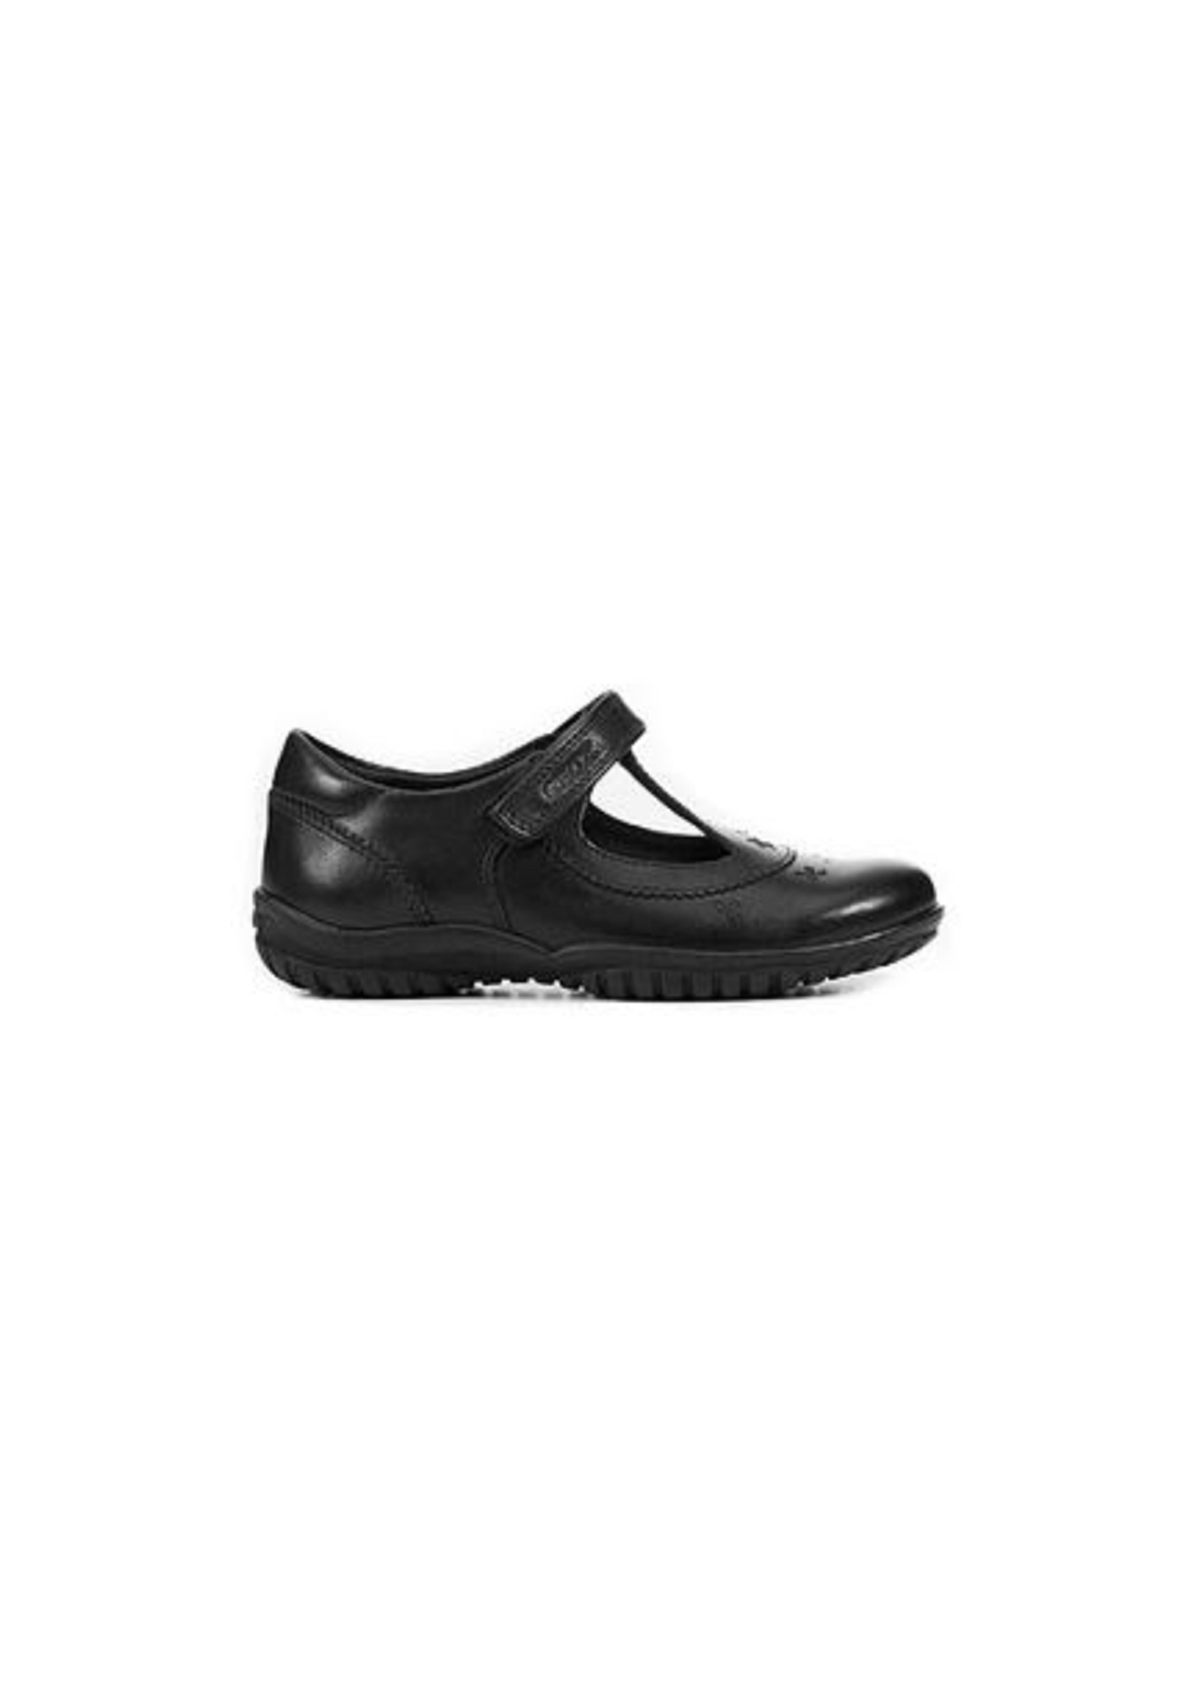 Geox Girls School Shoe SHADOW Black Strap